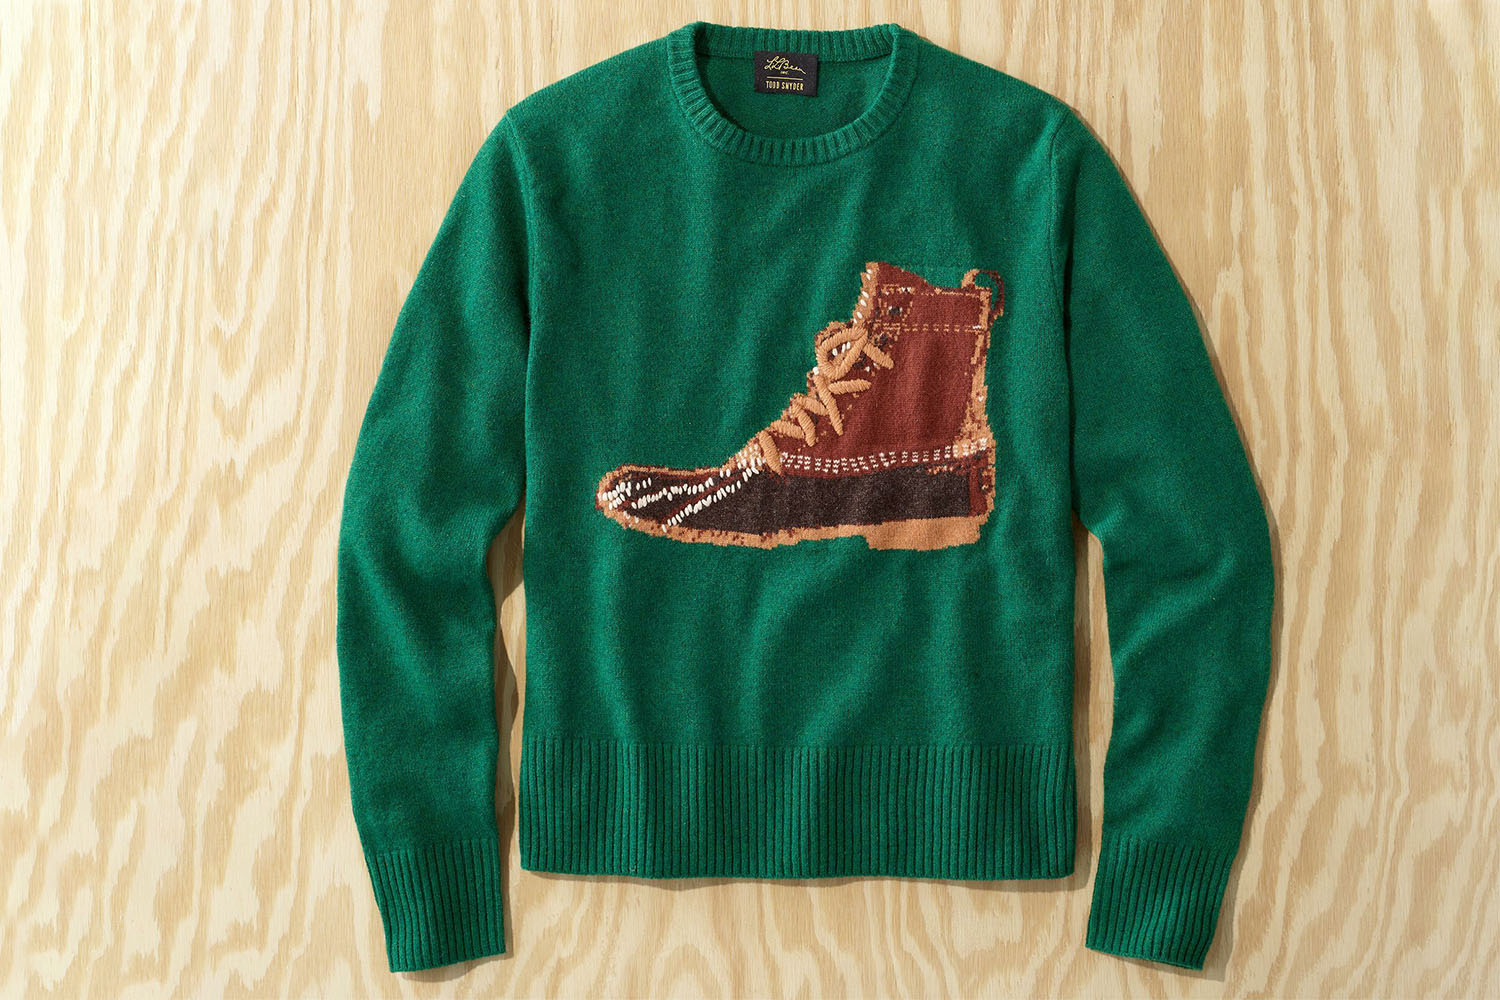 Boot sweater